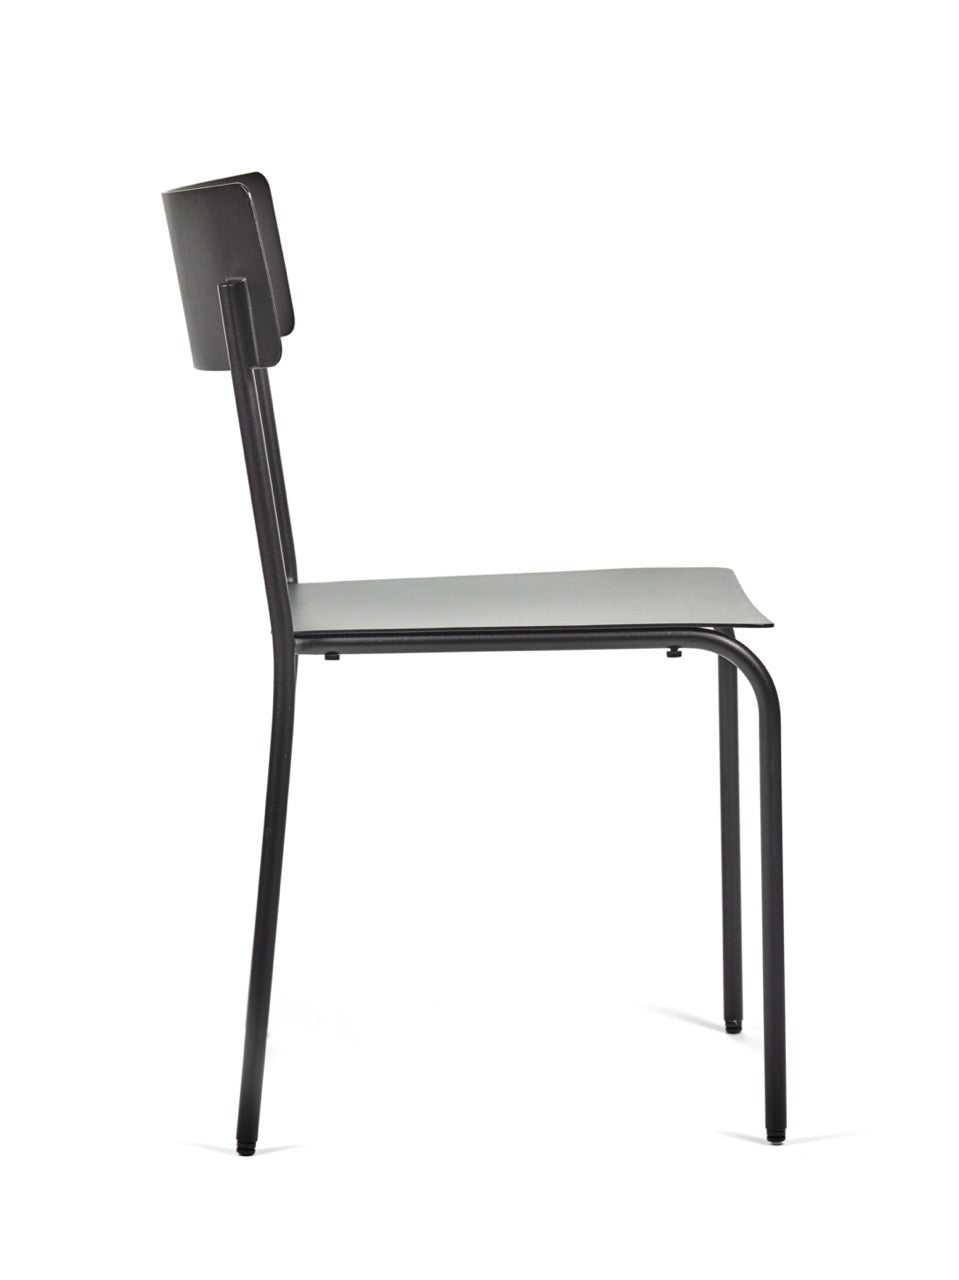 Serax August chair narrow by Vincent Van Duysen set of 2